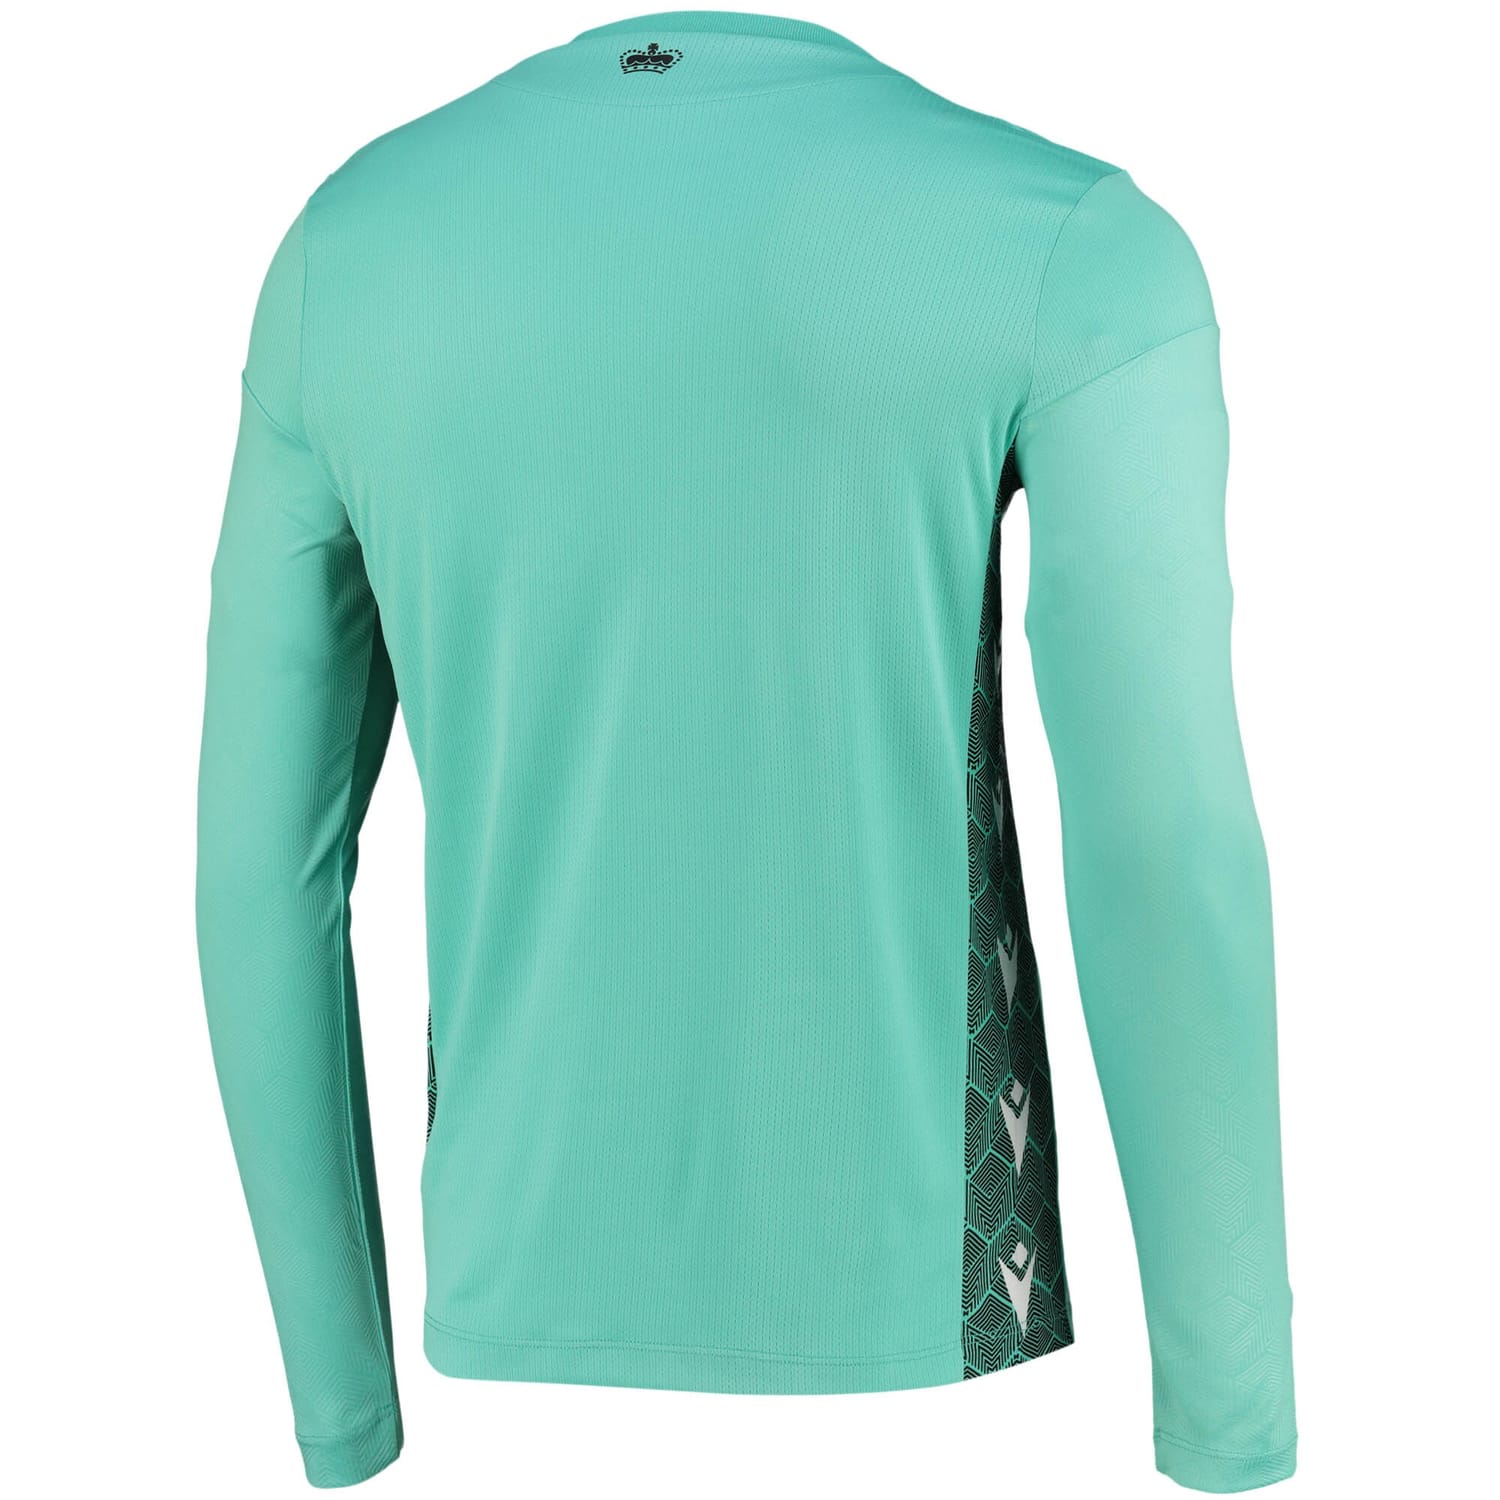 EFL League One Reading Goalkeeper Jersey Shirt Long Sleeve 2022-23 for Men